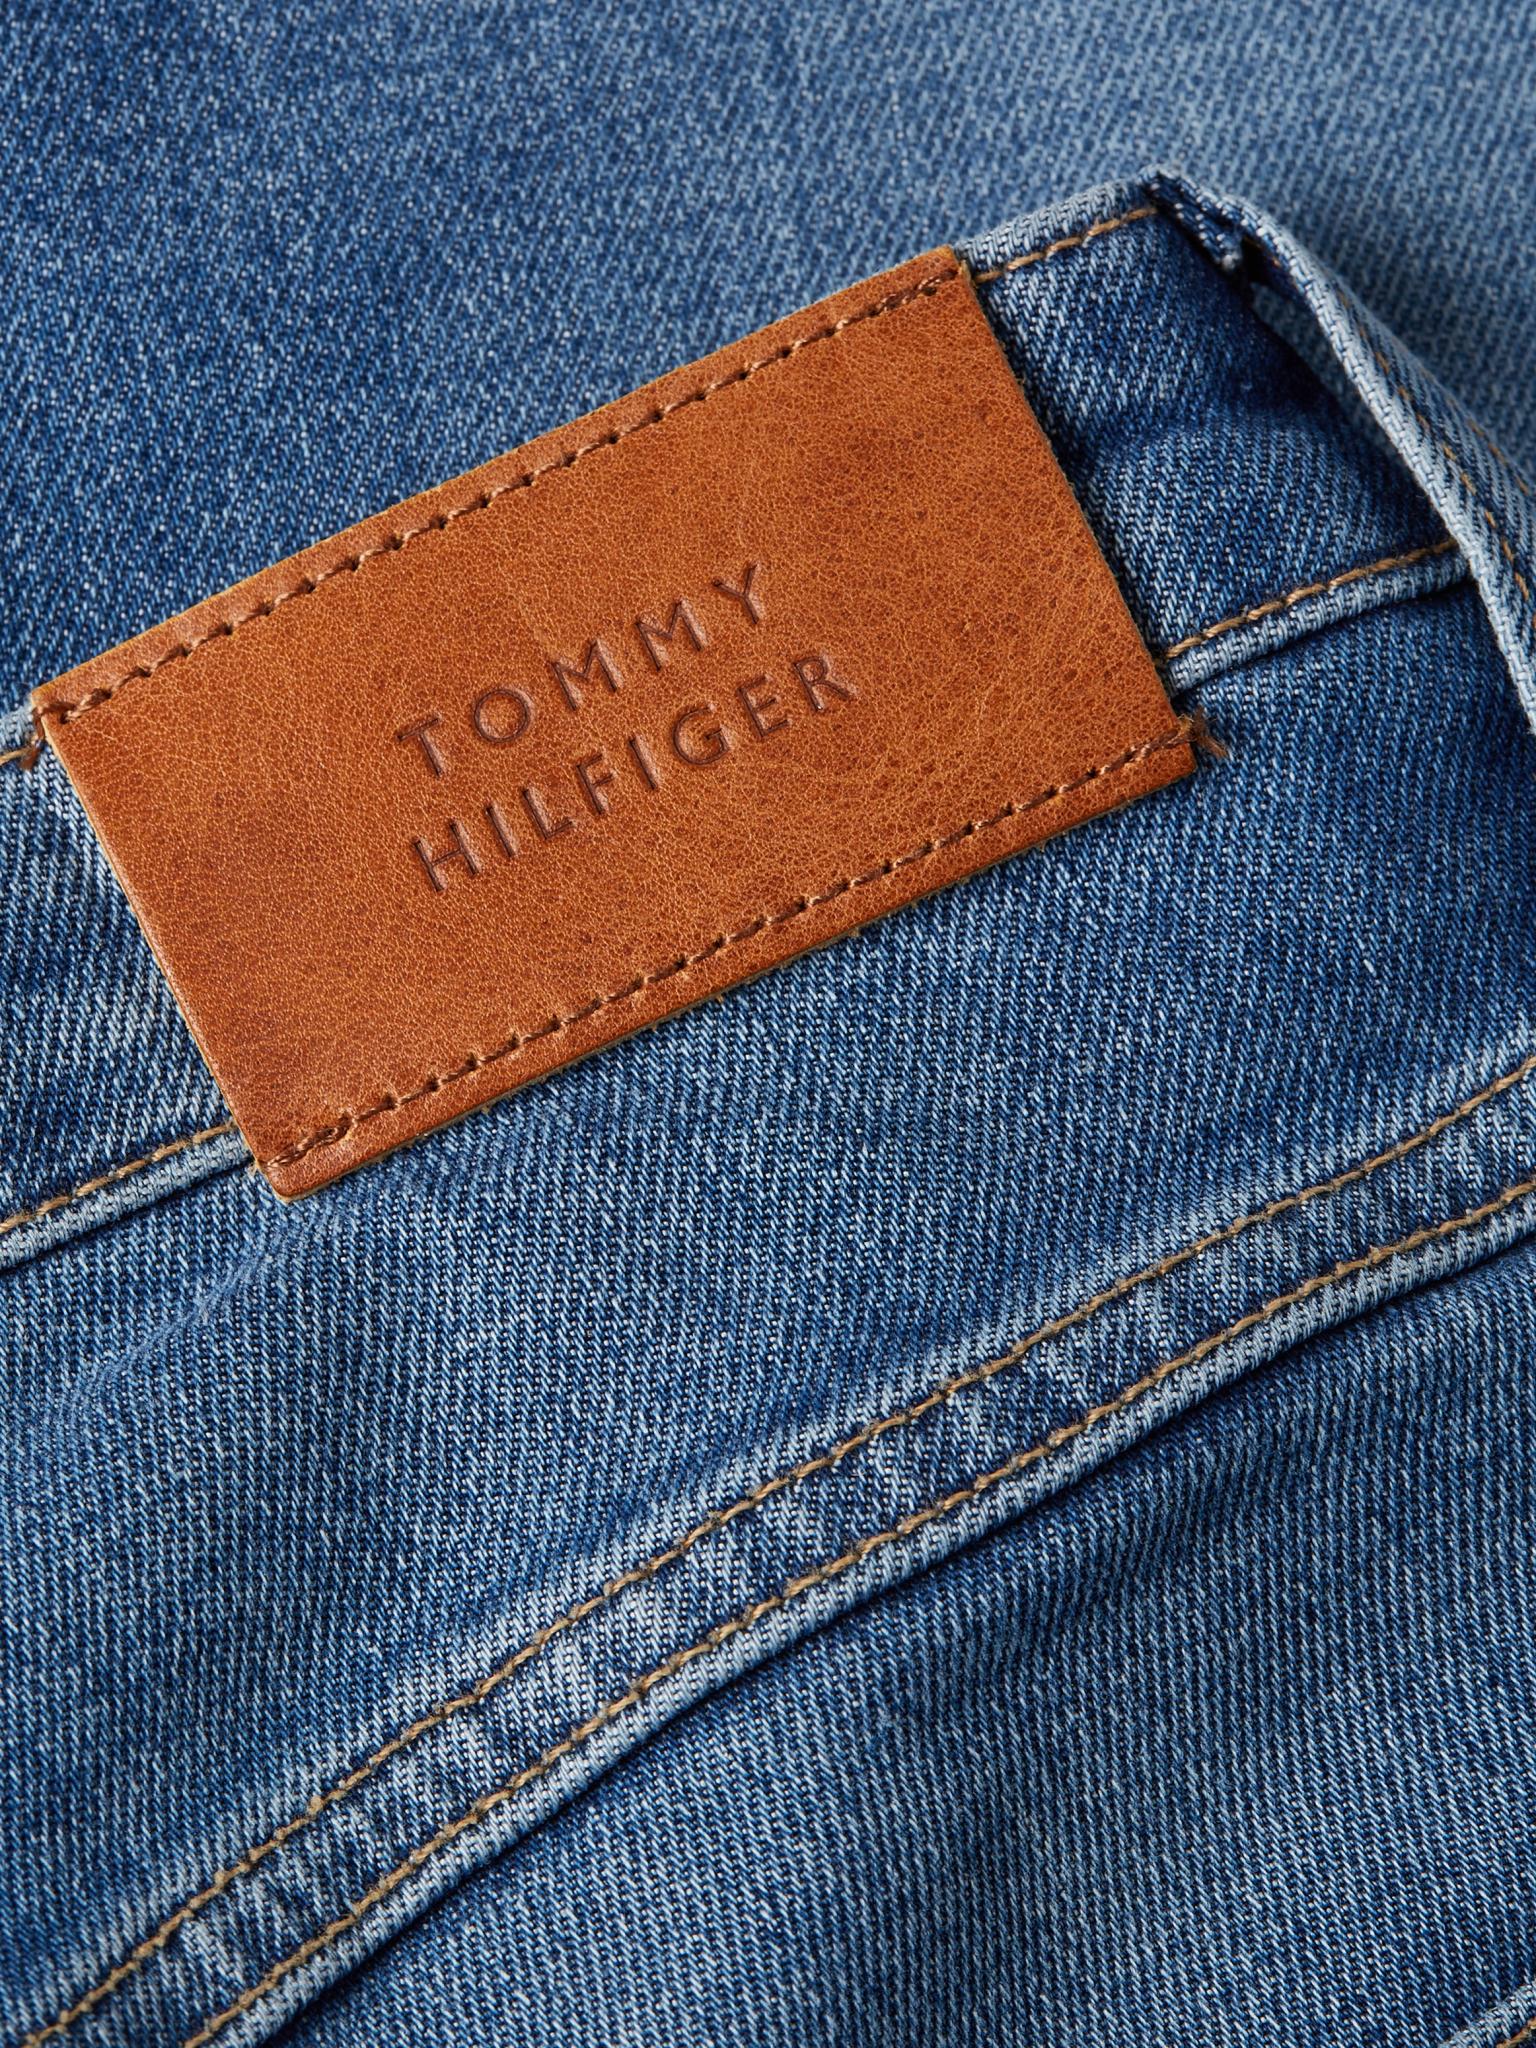 TOMMY HILFIGER Jeans 10735439